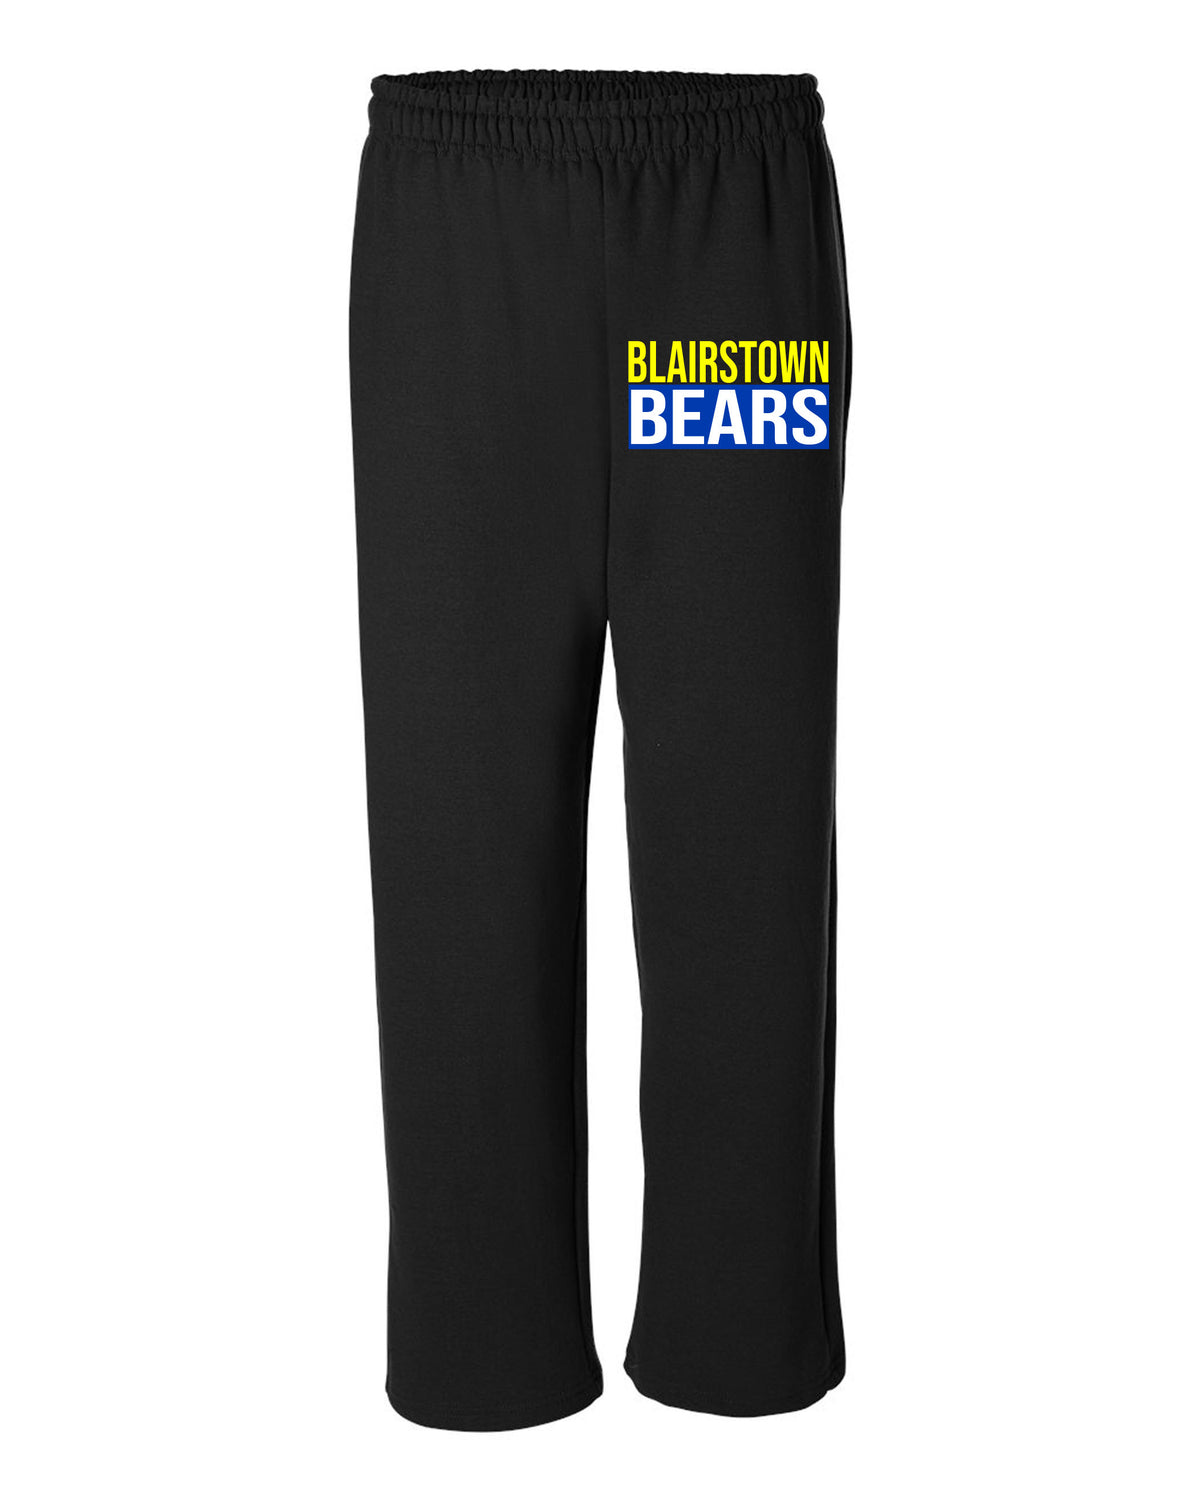 Blairstown Bears Design 12 Open Bottom Sweatpants